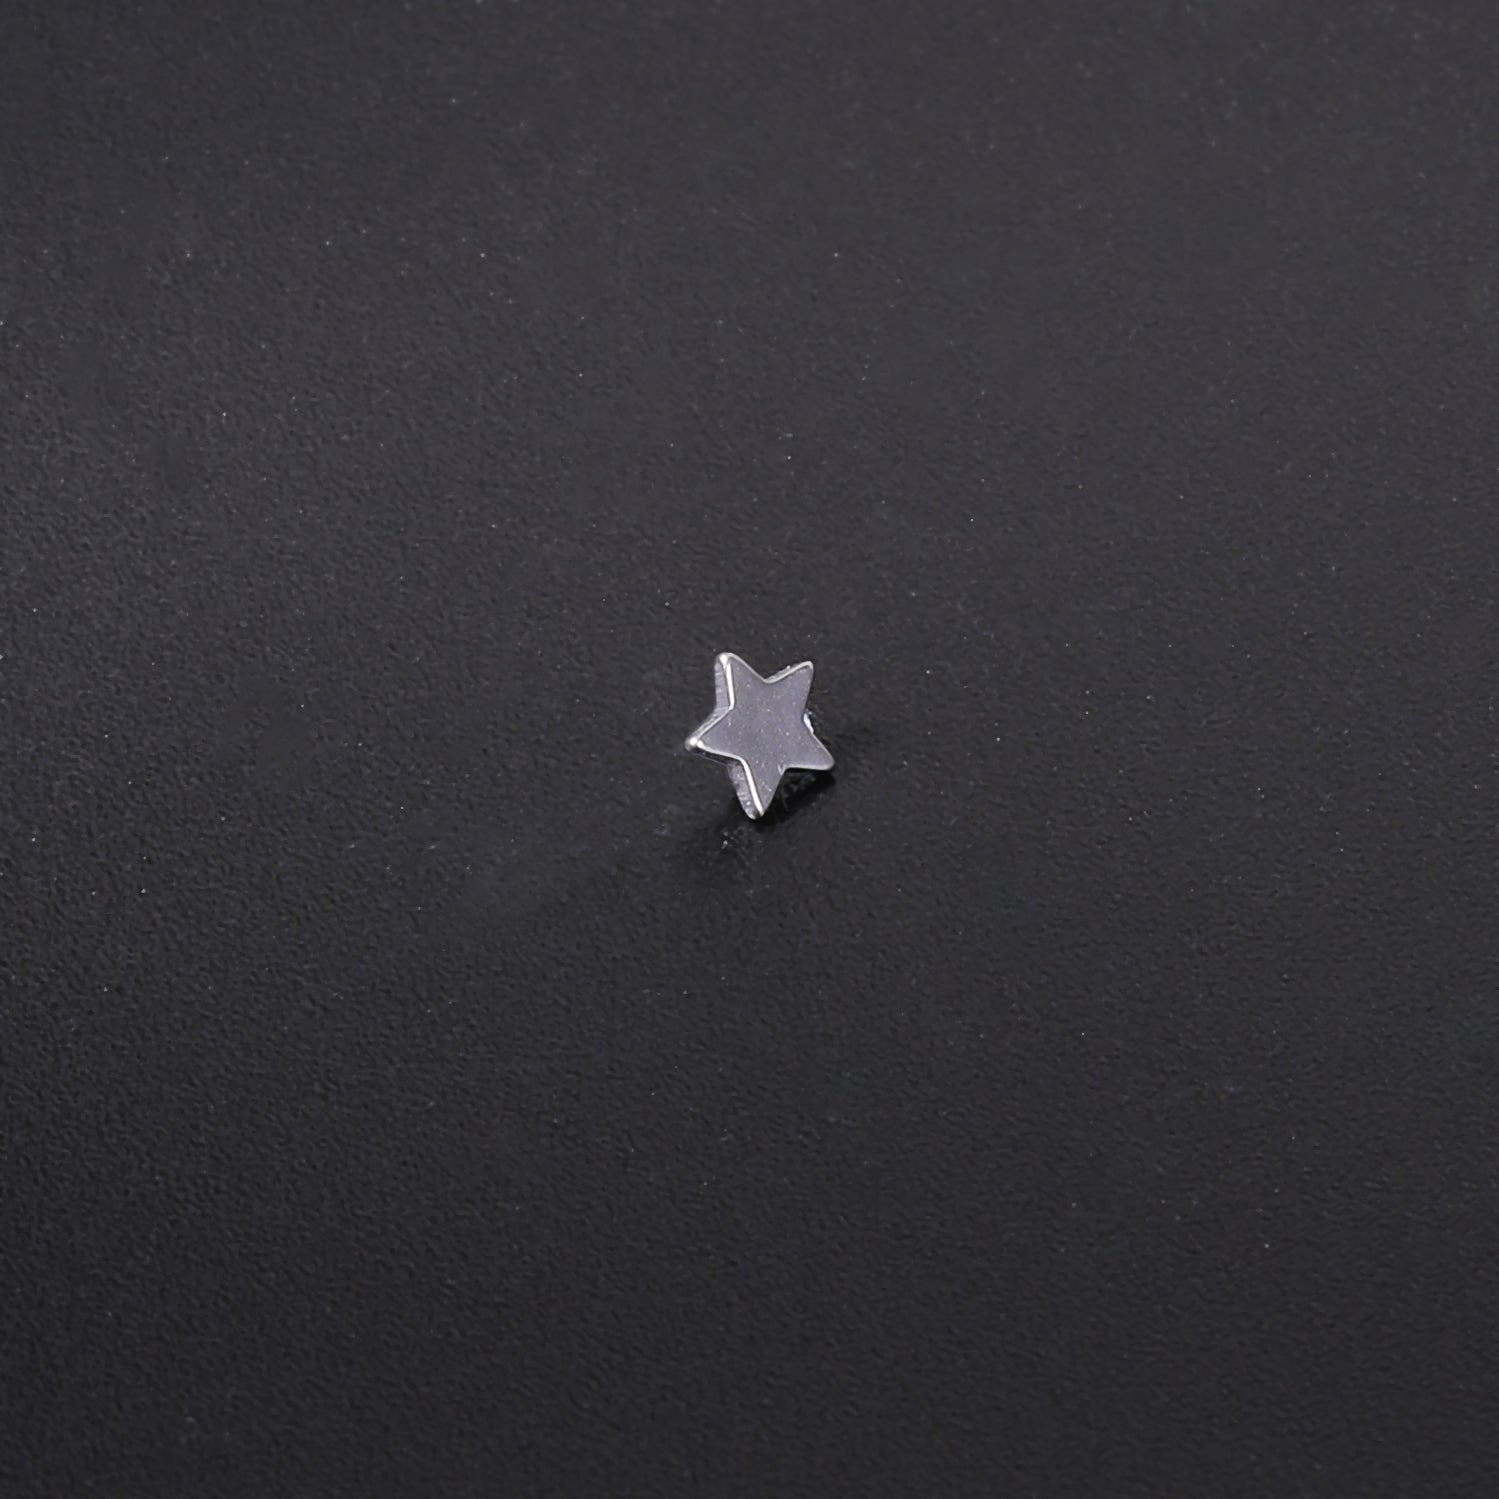 4pcs Star Dermal Anchor Tops Surgical Steel Internally Threaded Skin Diver Piercings